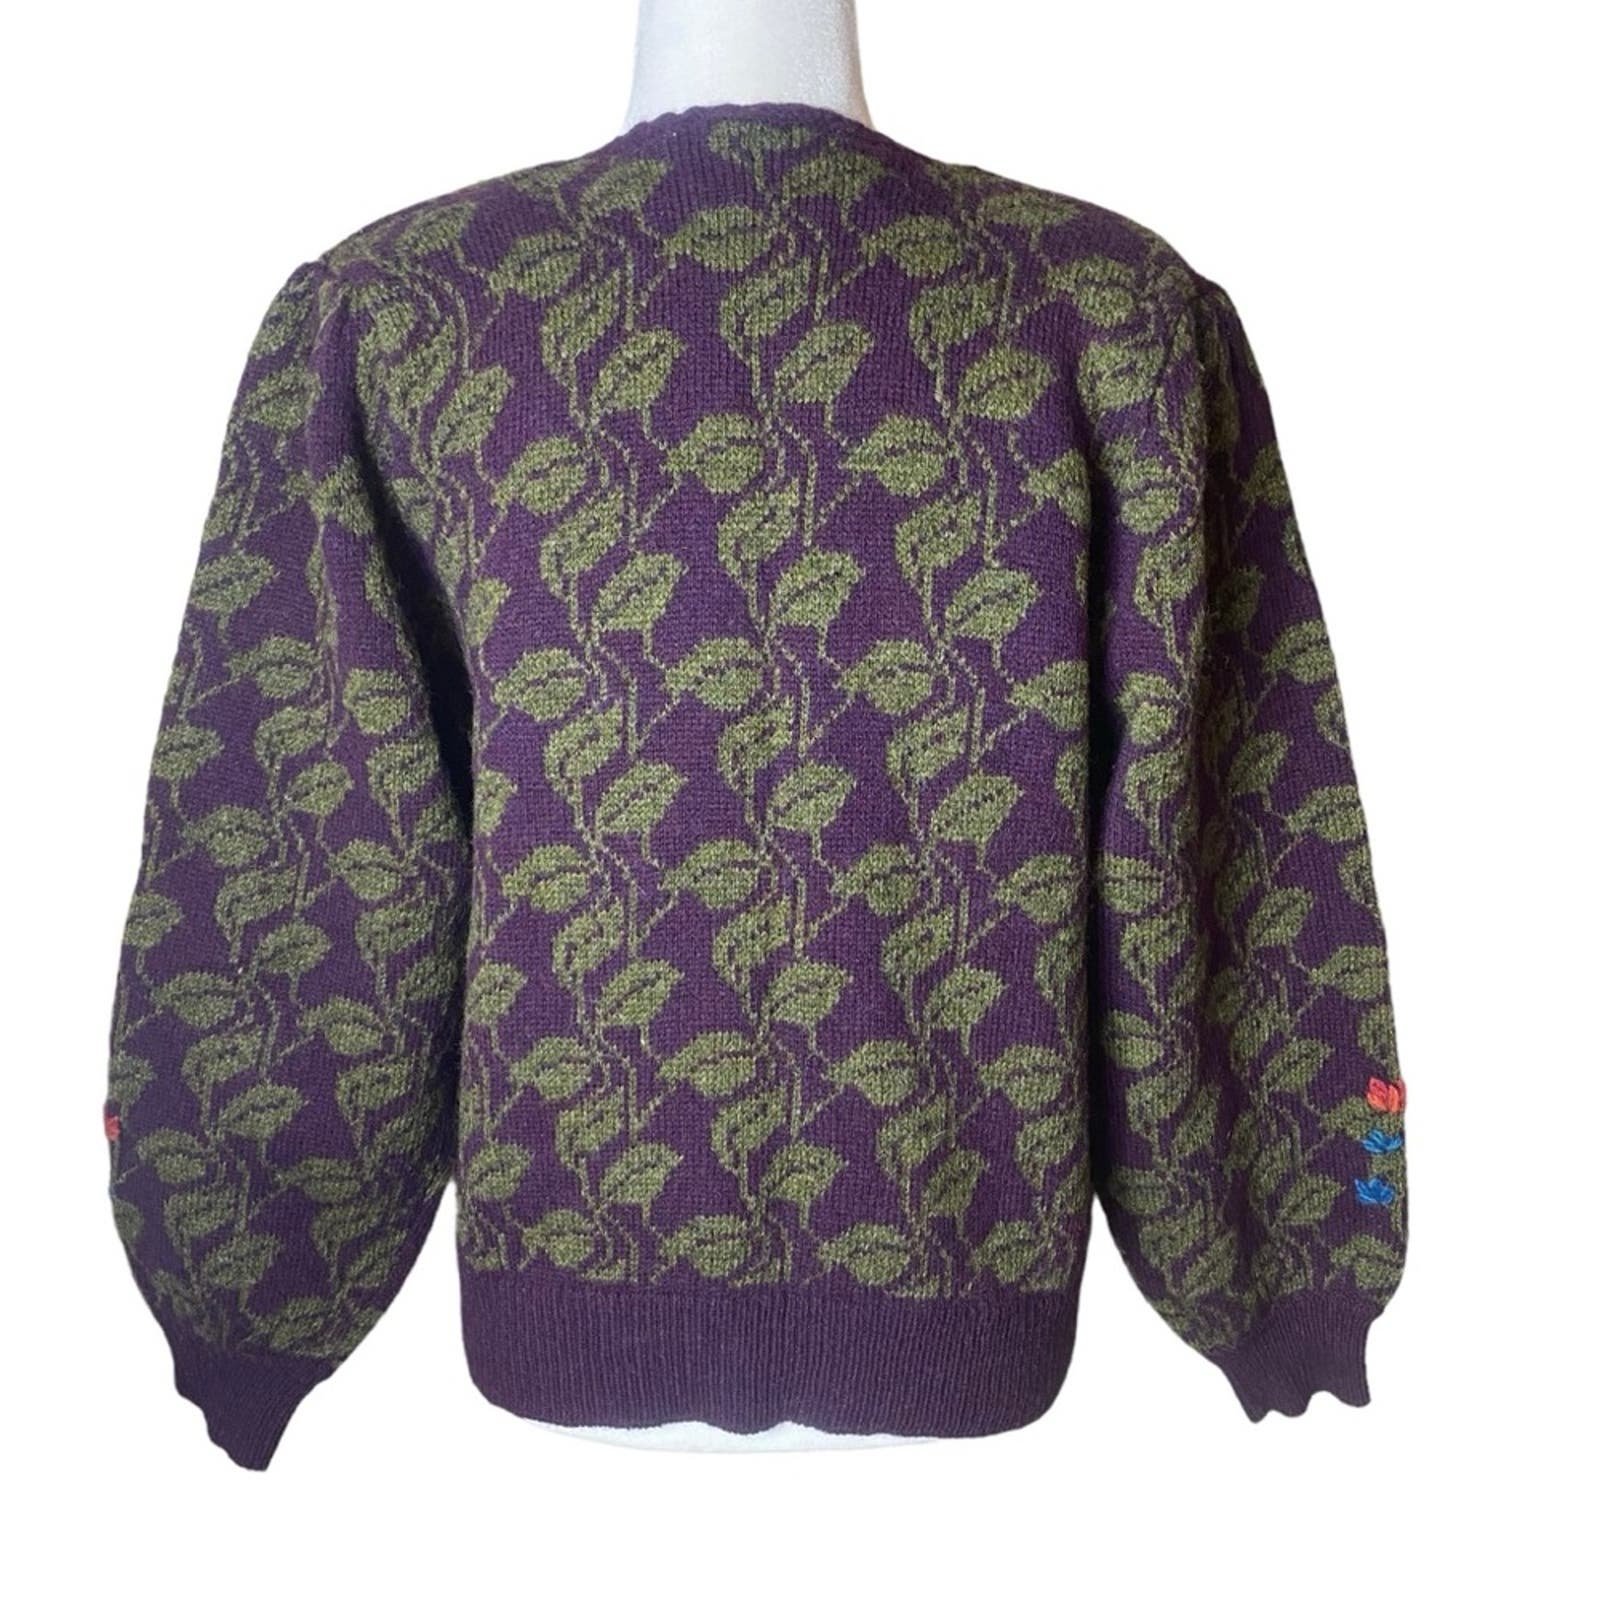 Popular Vintage Components hand embroidered wool floral cardigan sweater size large kfJASrrta Online Shop